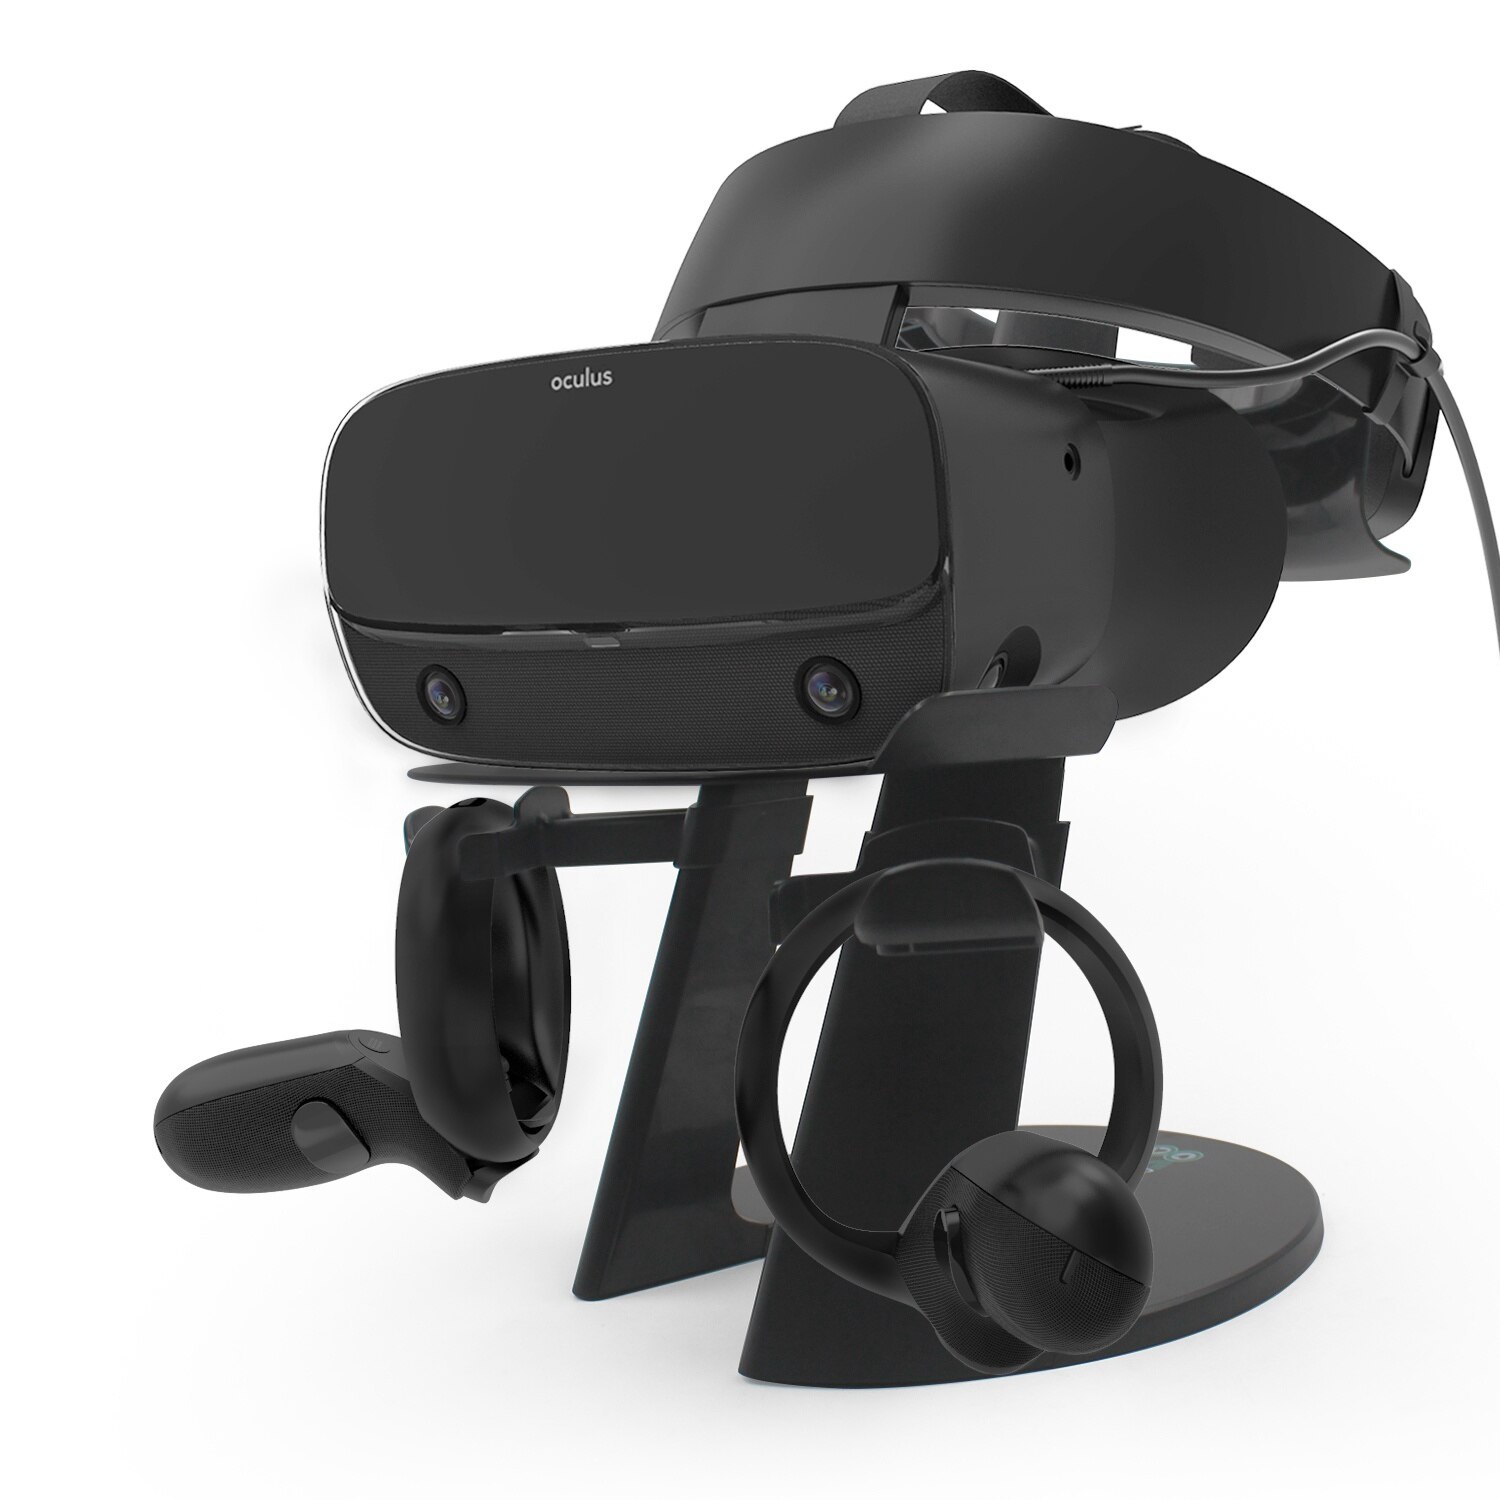 Amvr Oom Vr Stand, headset Display Houder En Controller Mount Station Voor Oculus Rift S / Oculus Quest Headset En Contact Contr